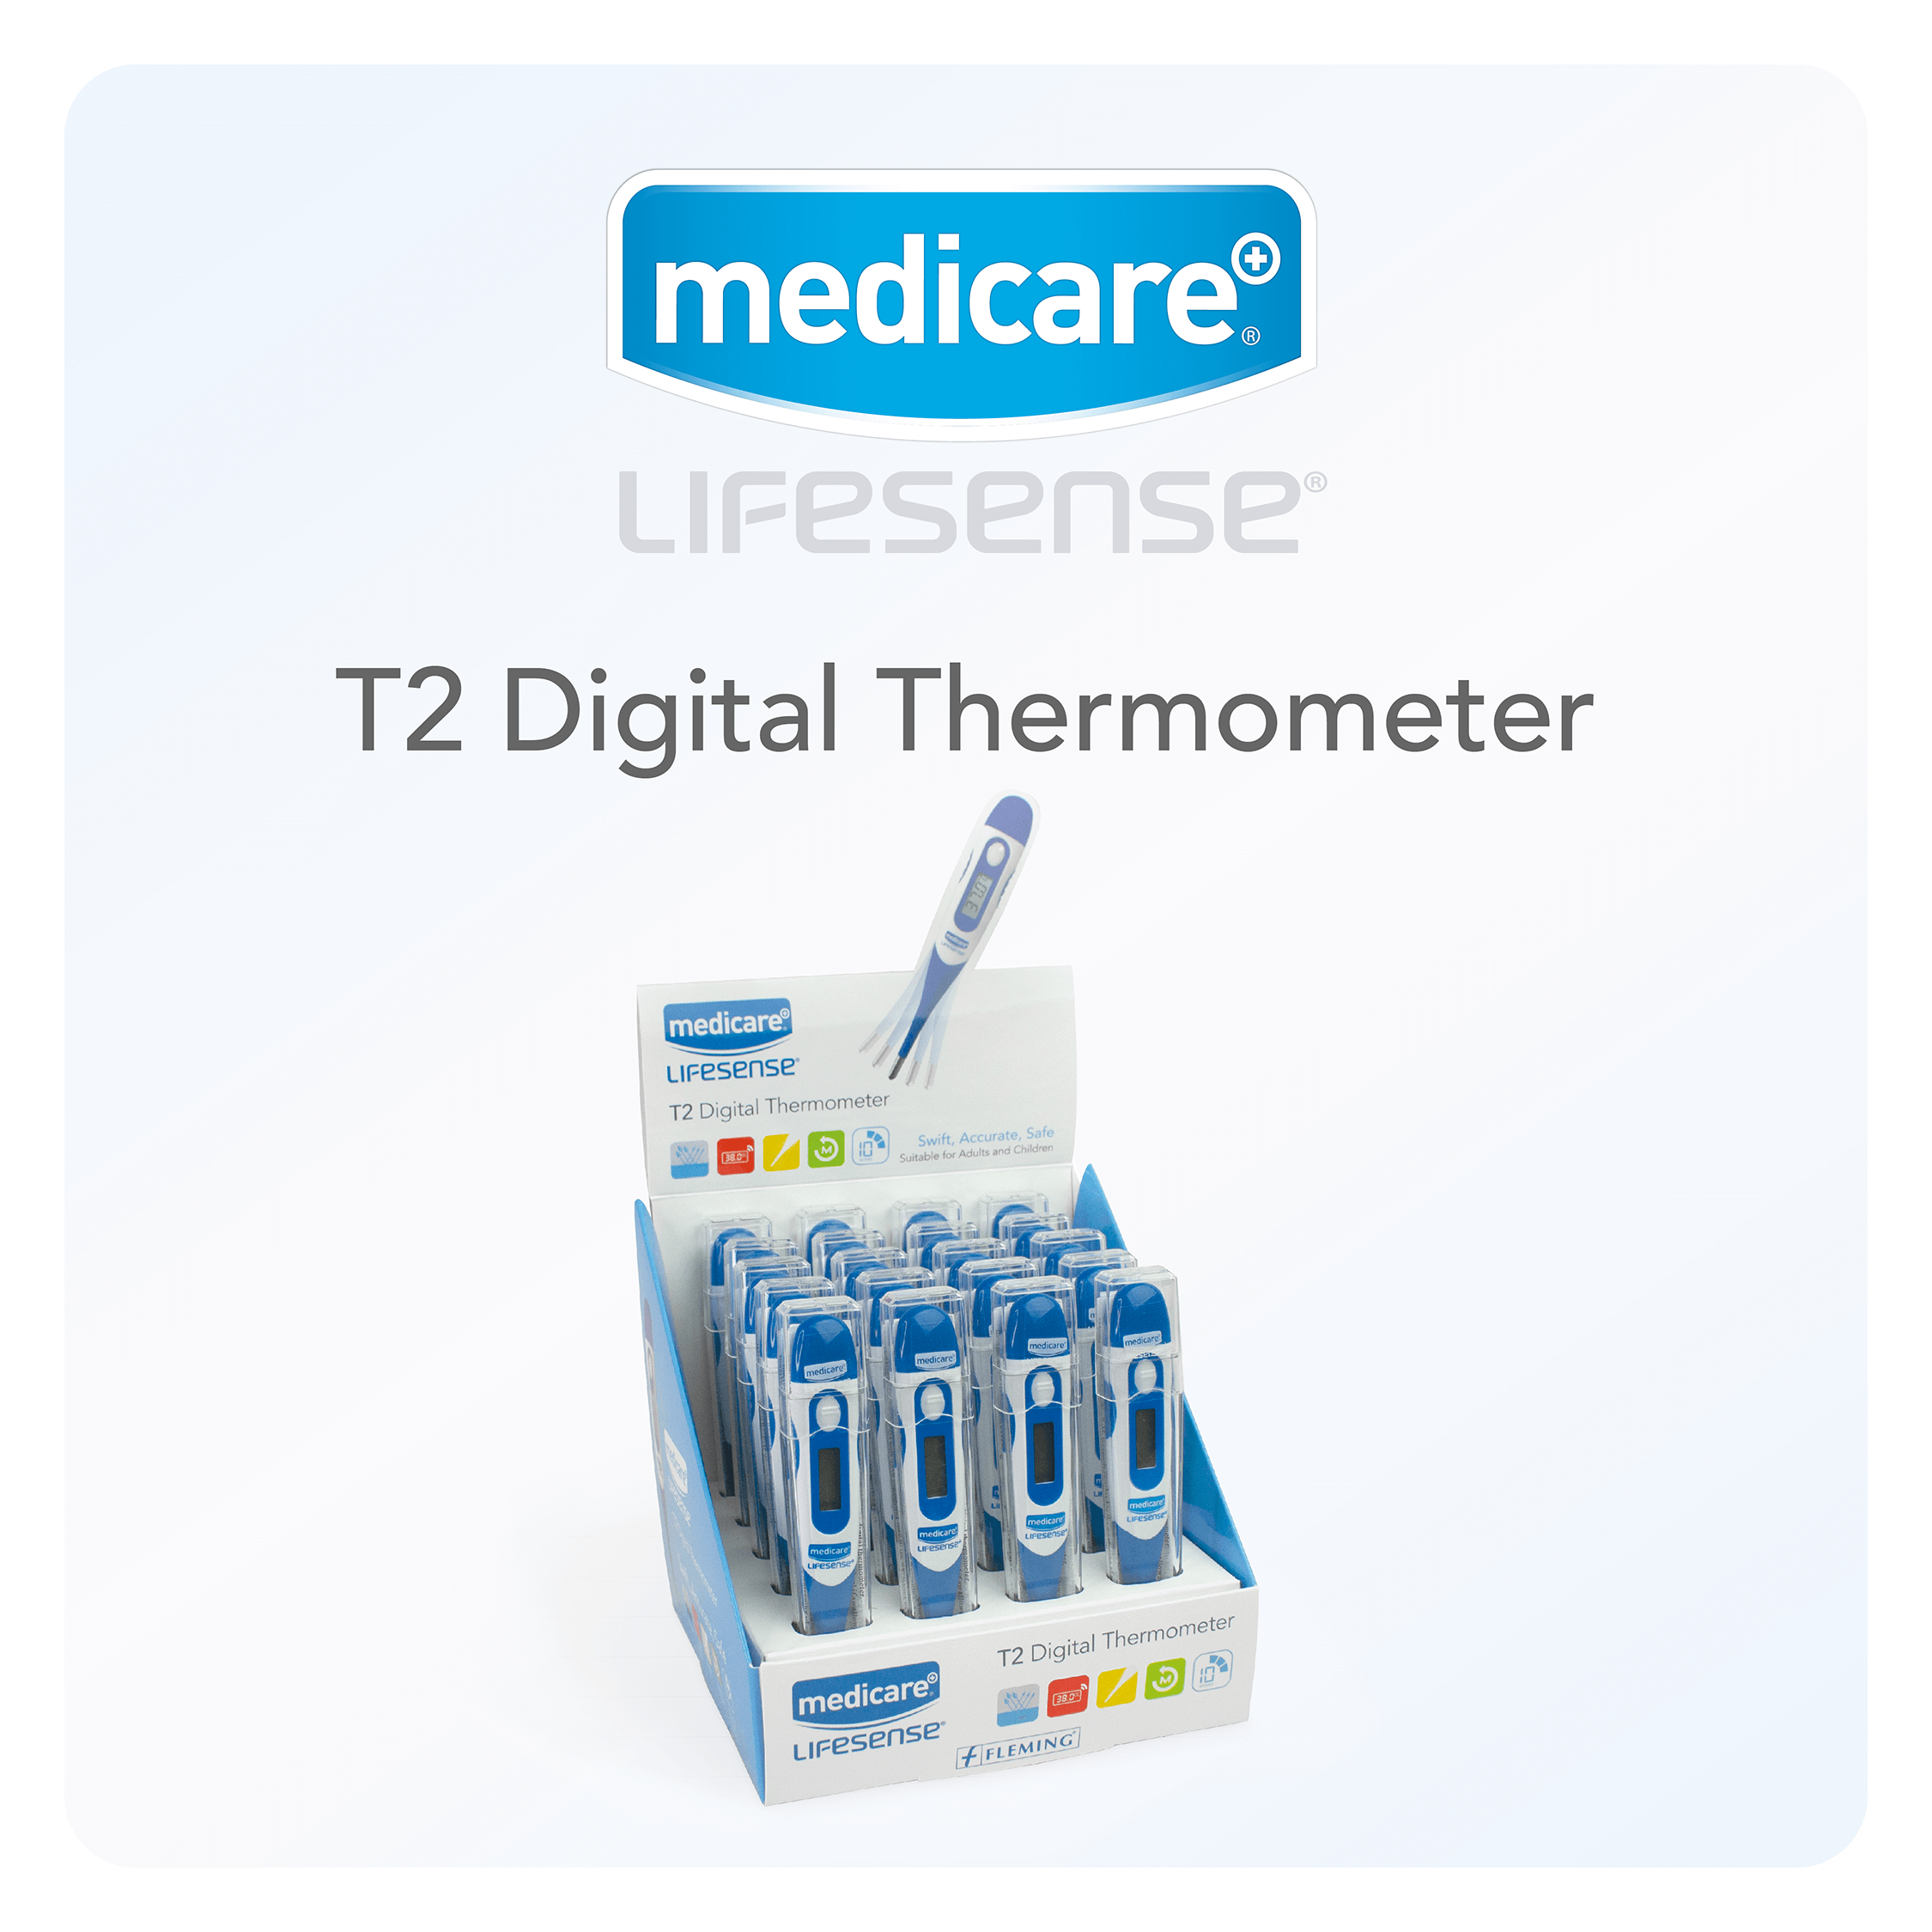 Medicare digital thermometer